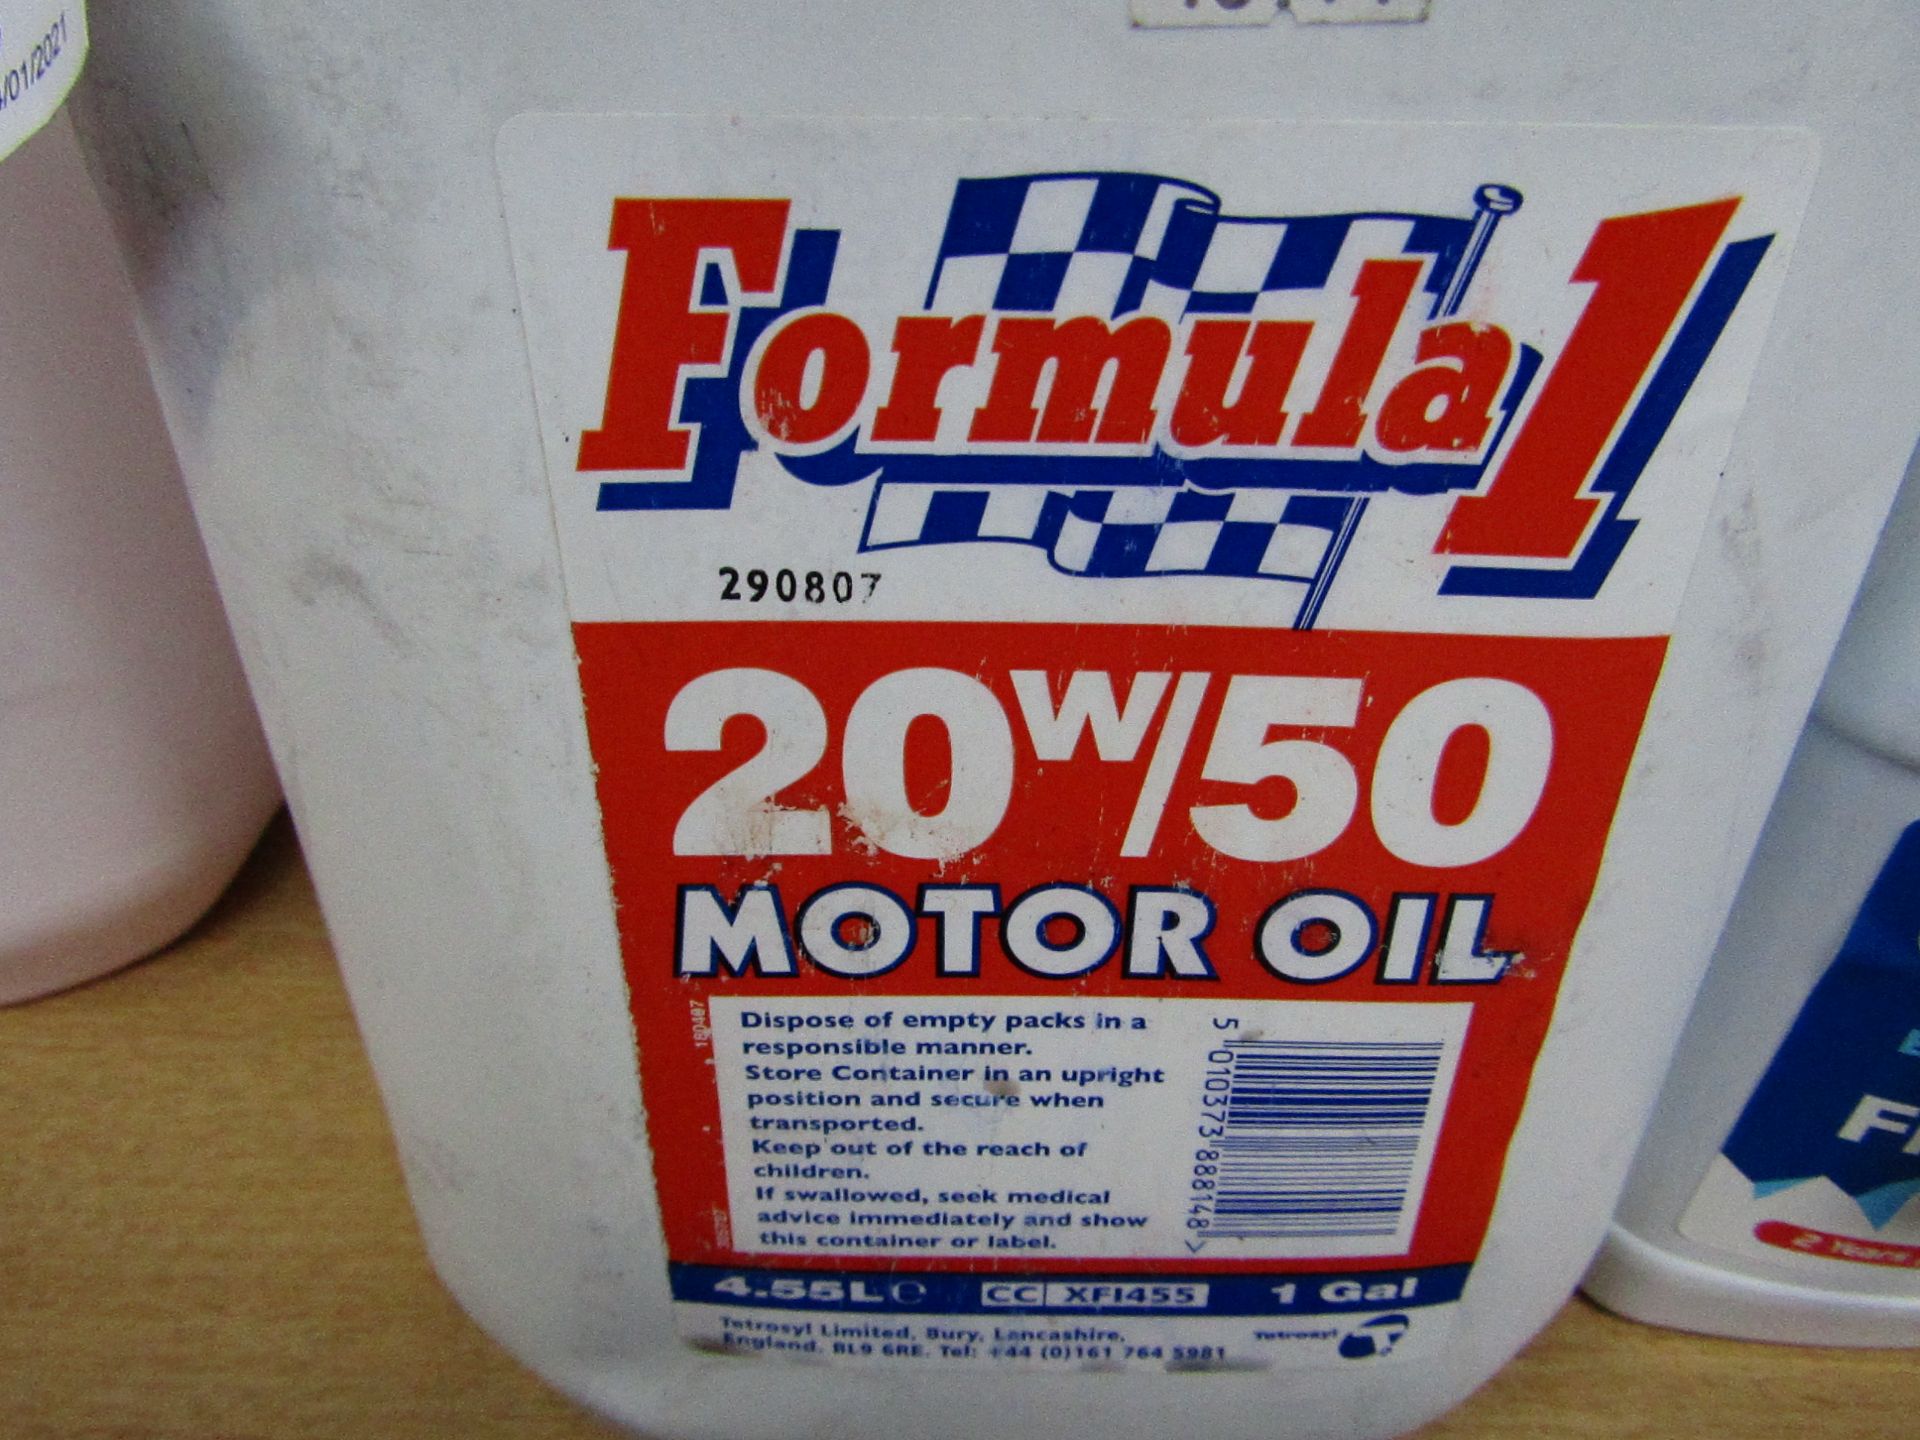 1x Formula1 - 20w/50 Motor Oil - 4.55L - Unused.